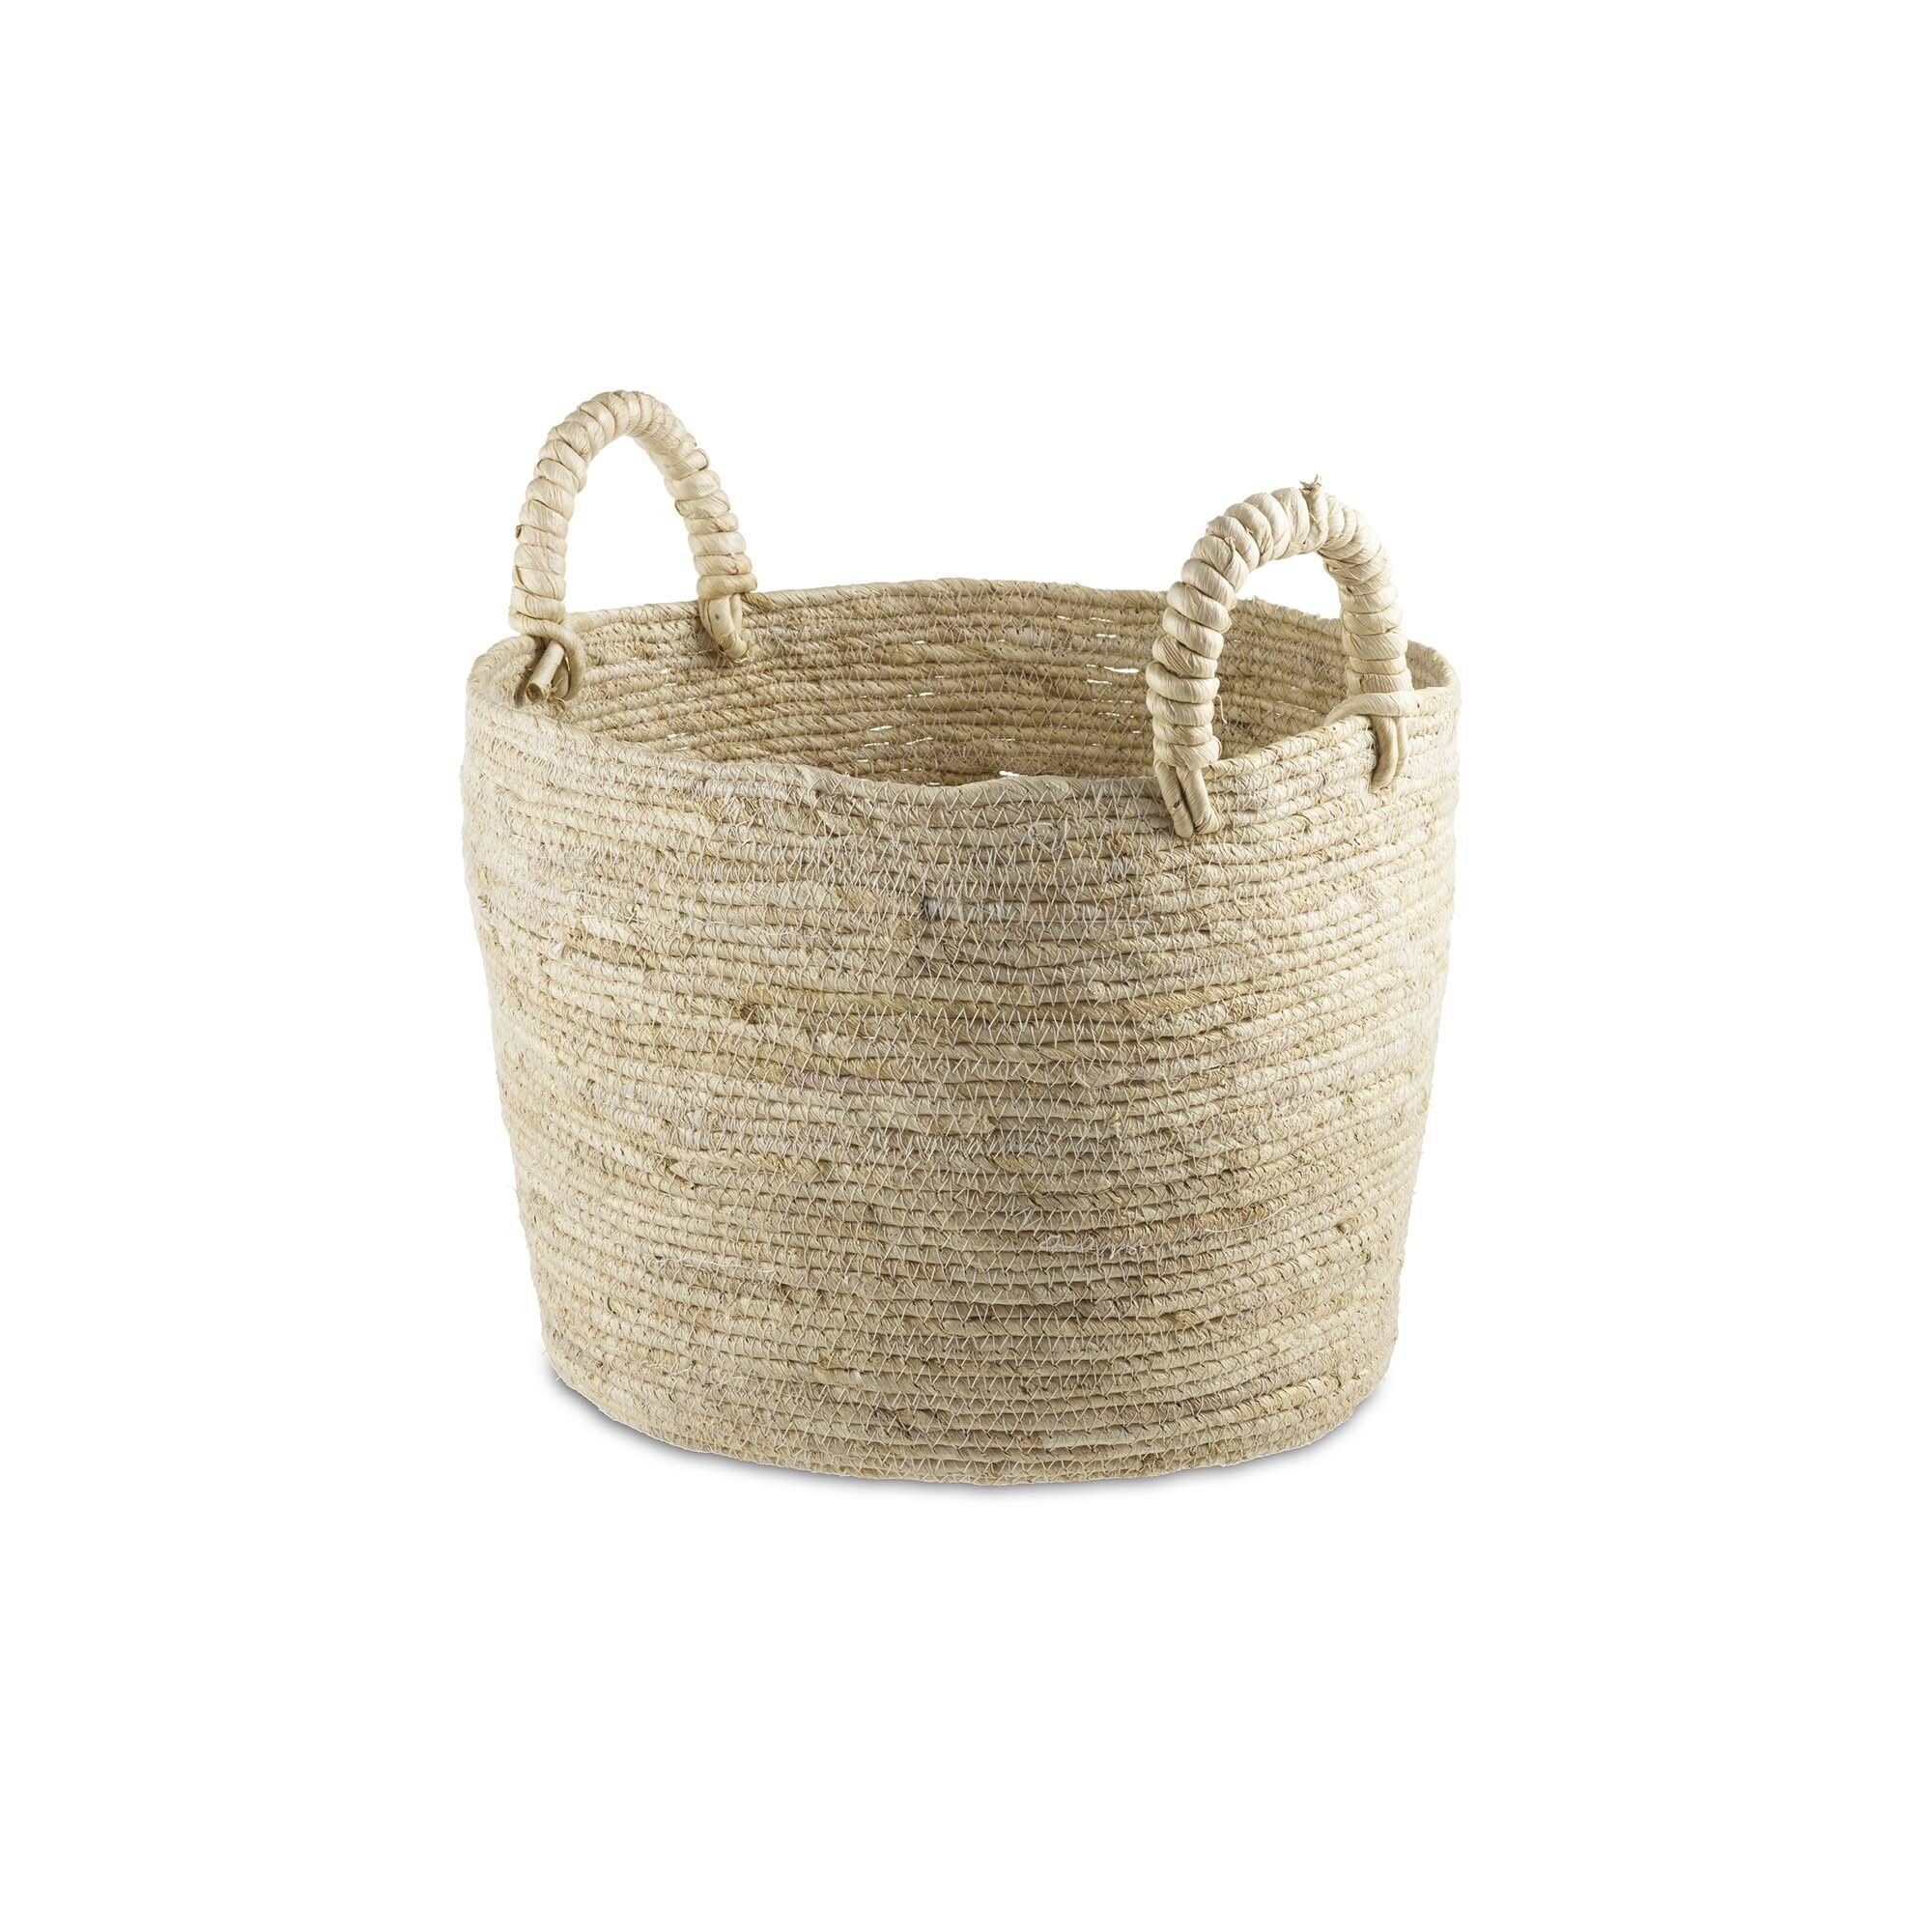 Wicker Baskets With Handles - VisualHunt